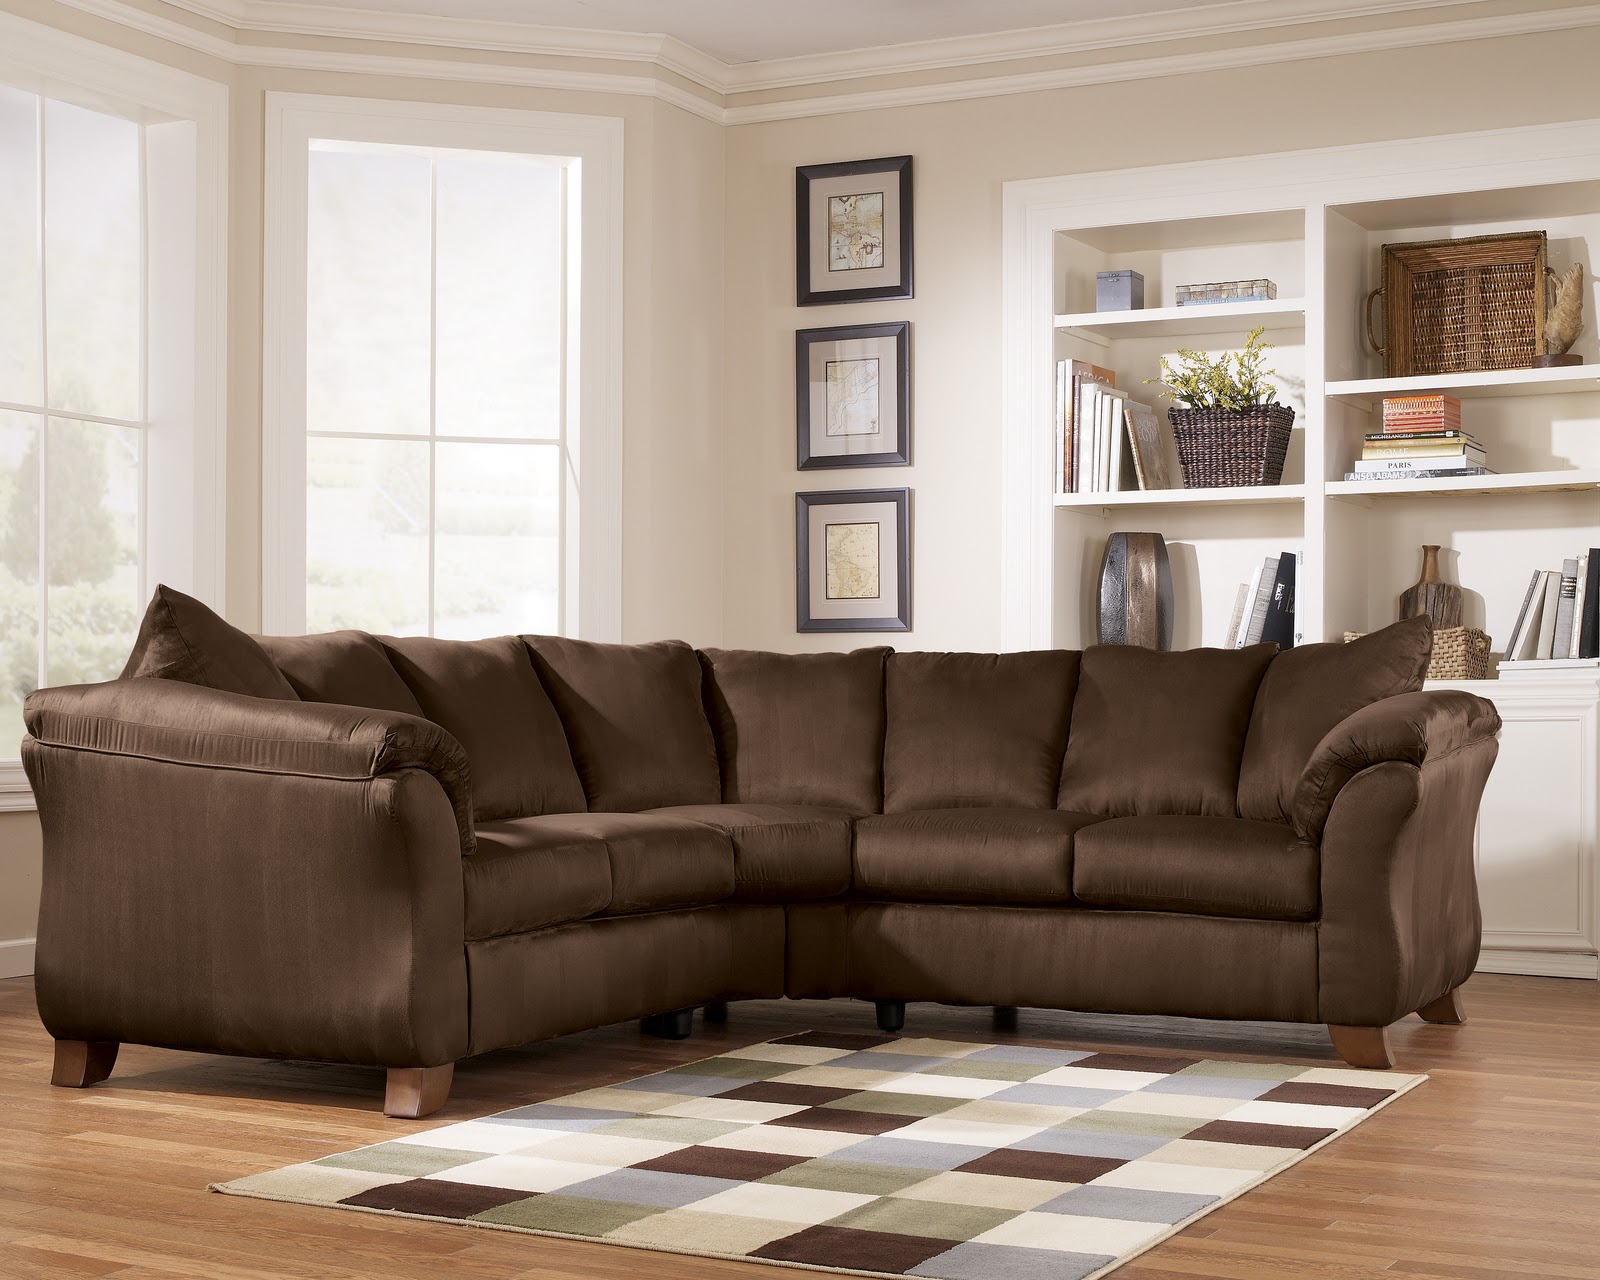 Ashley Furniture Clearance Sales 70 Off | wallfree.ninja